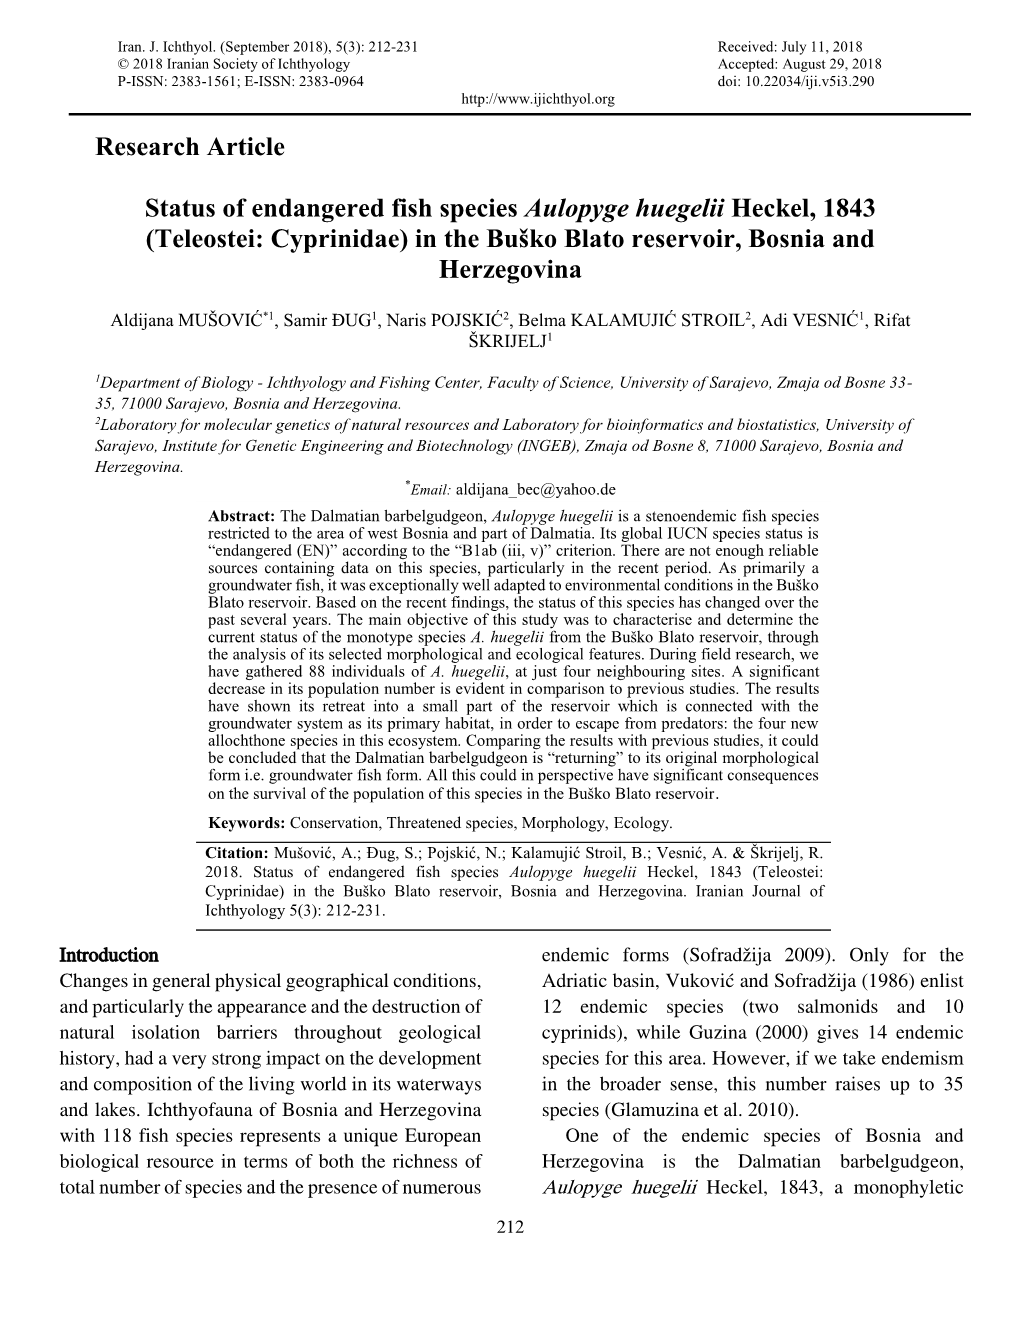 Research Article Status of Endangered Fish Species Aulopyge Huegelii Heckel, 1843 (Teleostei: Cyprinidae) in the Buško Blato Re